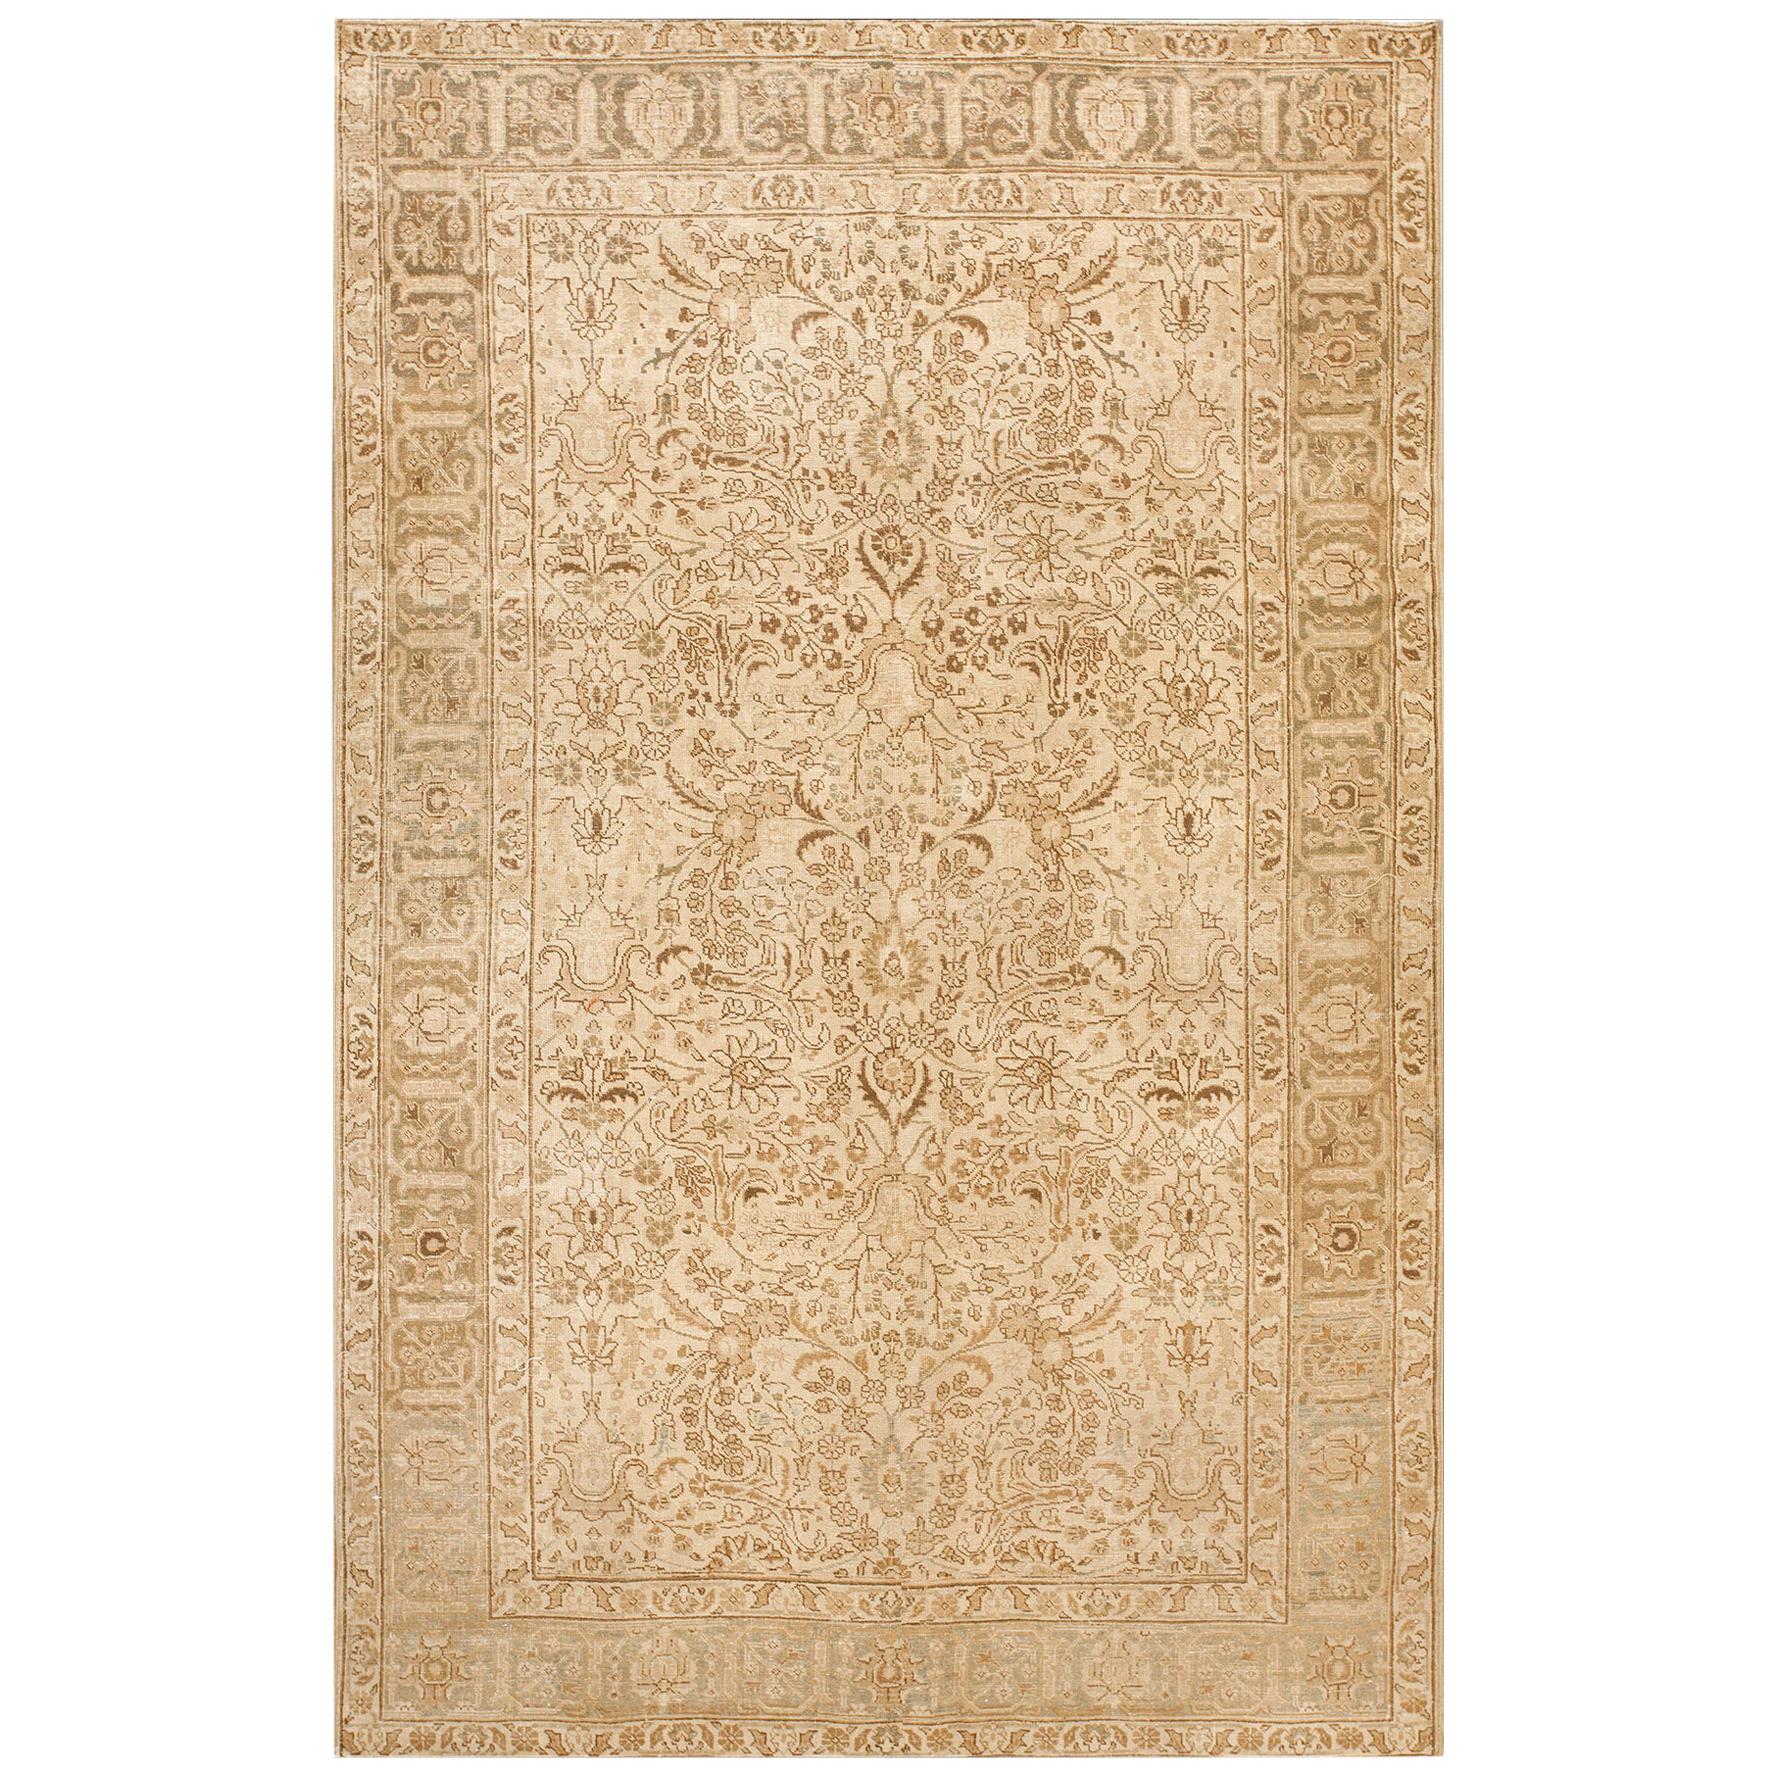 Early 20th Century Persian Tabriz Carpet ( 6'6" x 10' - 198 x 305 )